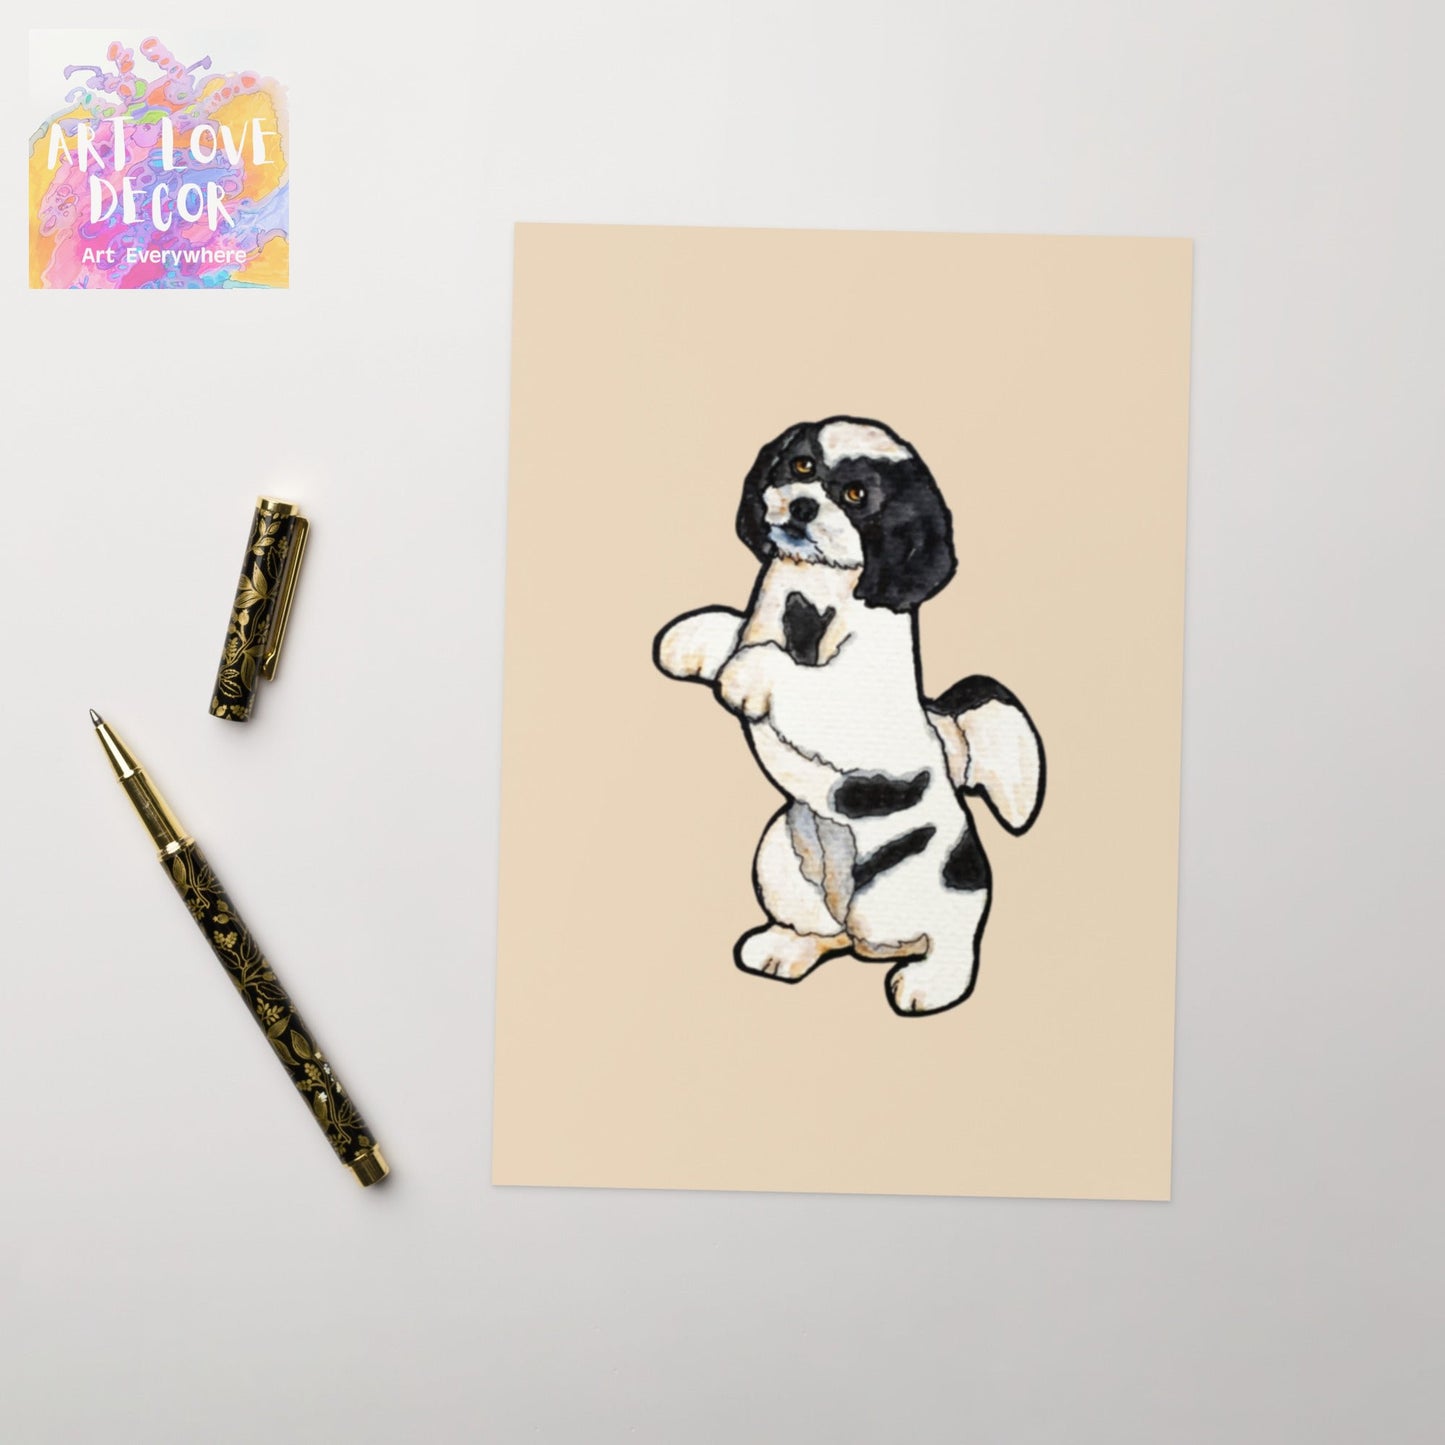 Sit Up Dog Greeting card - Art Love Decor